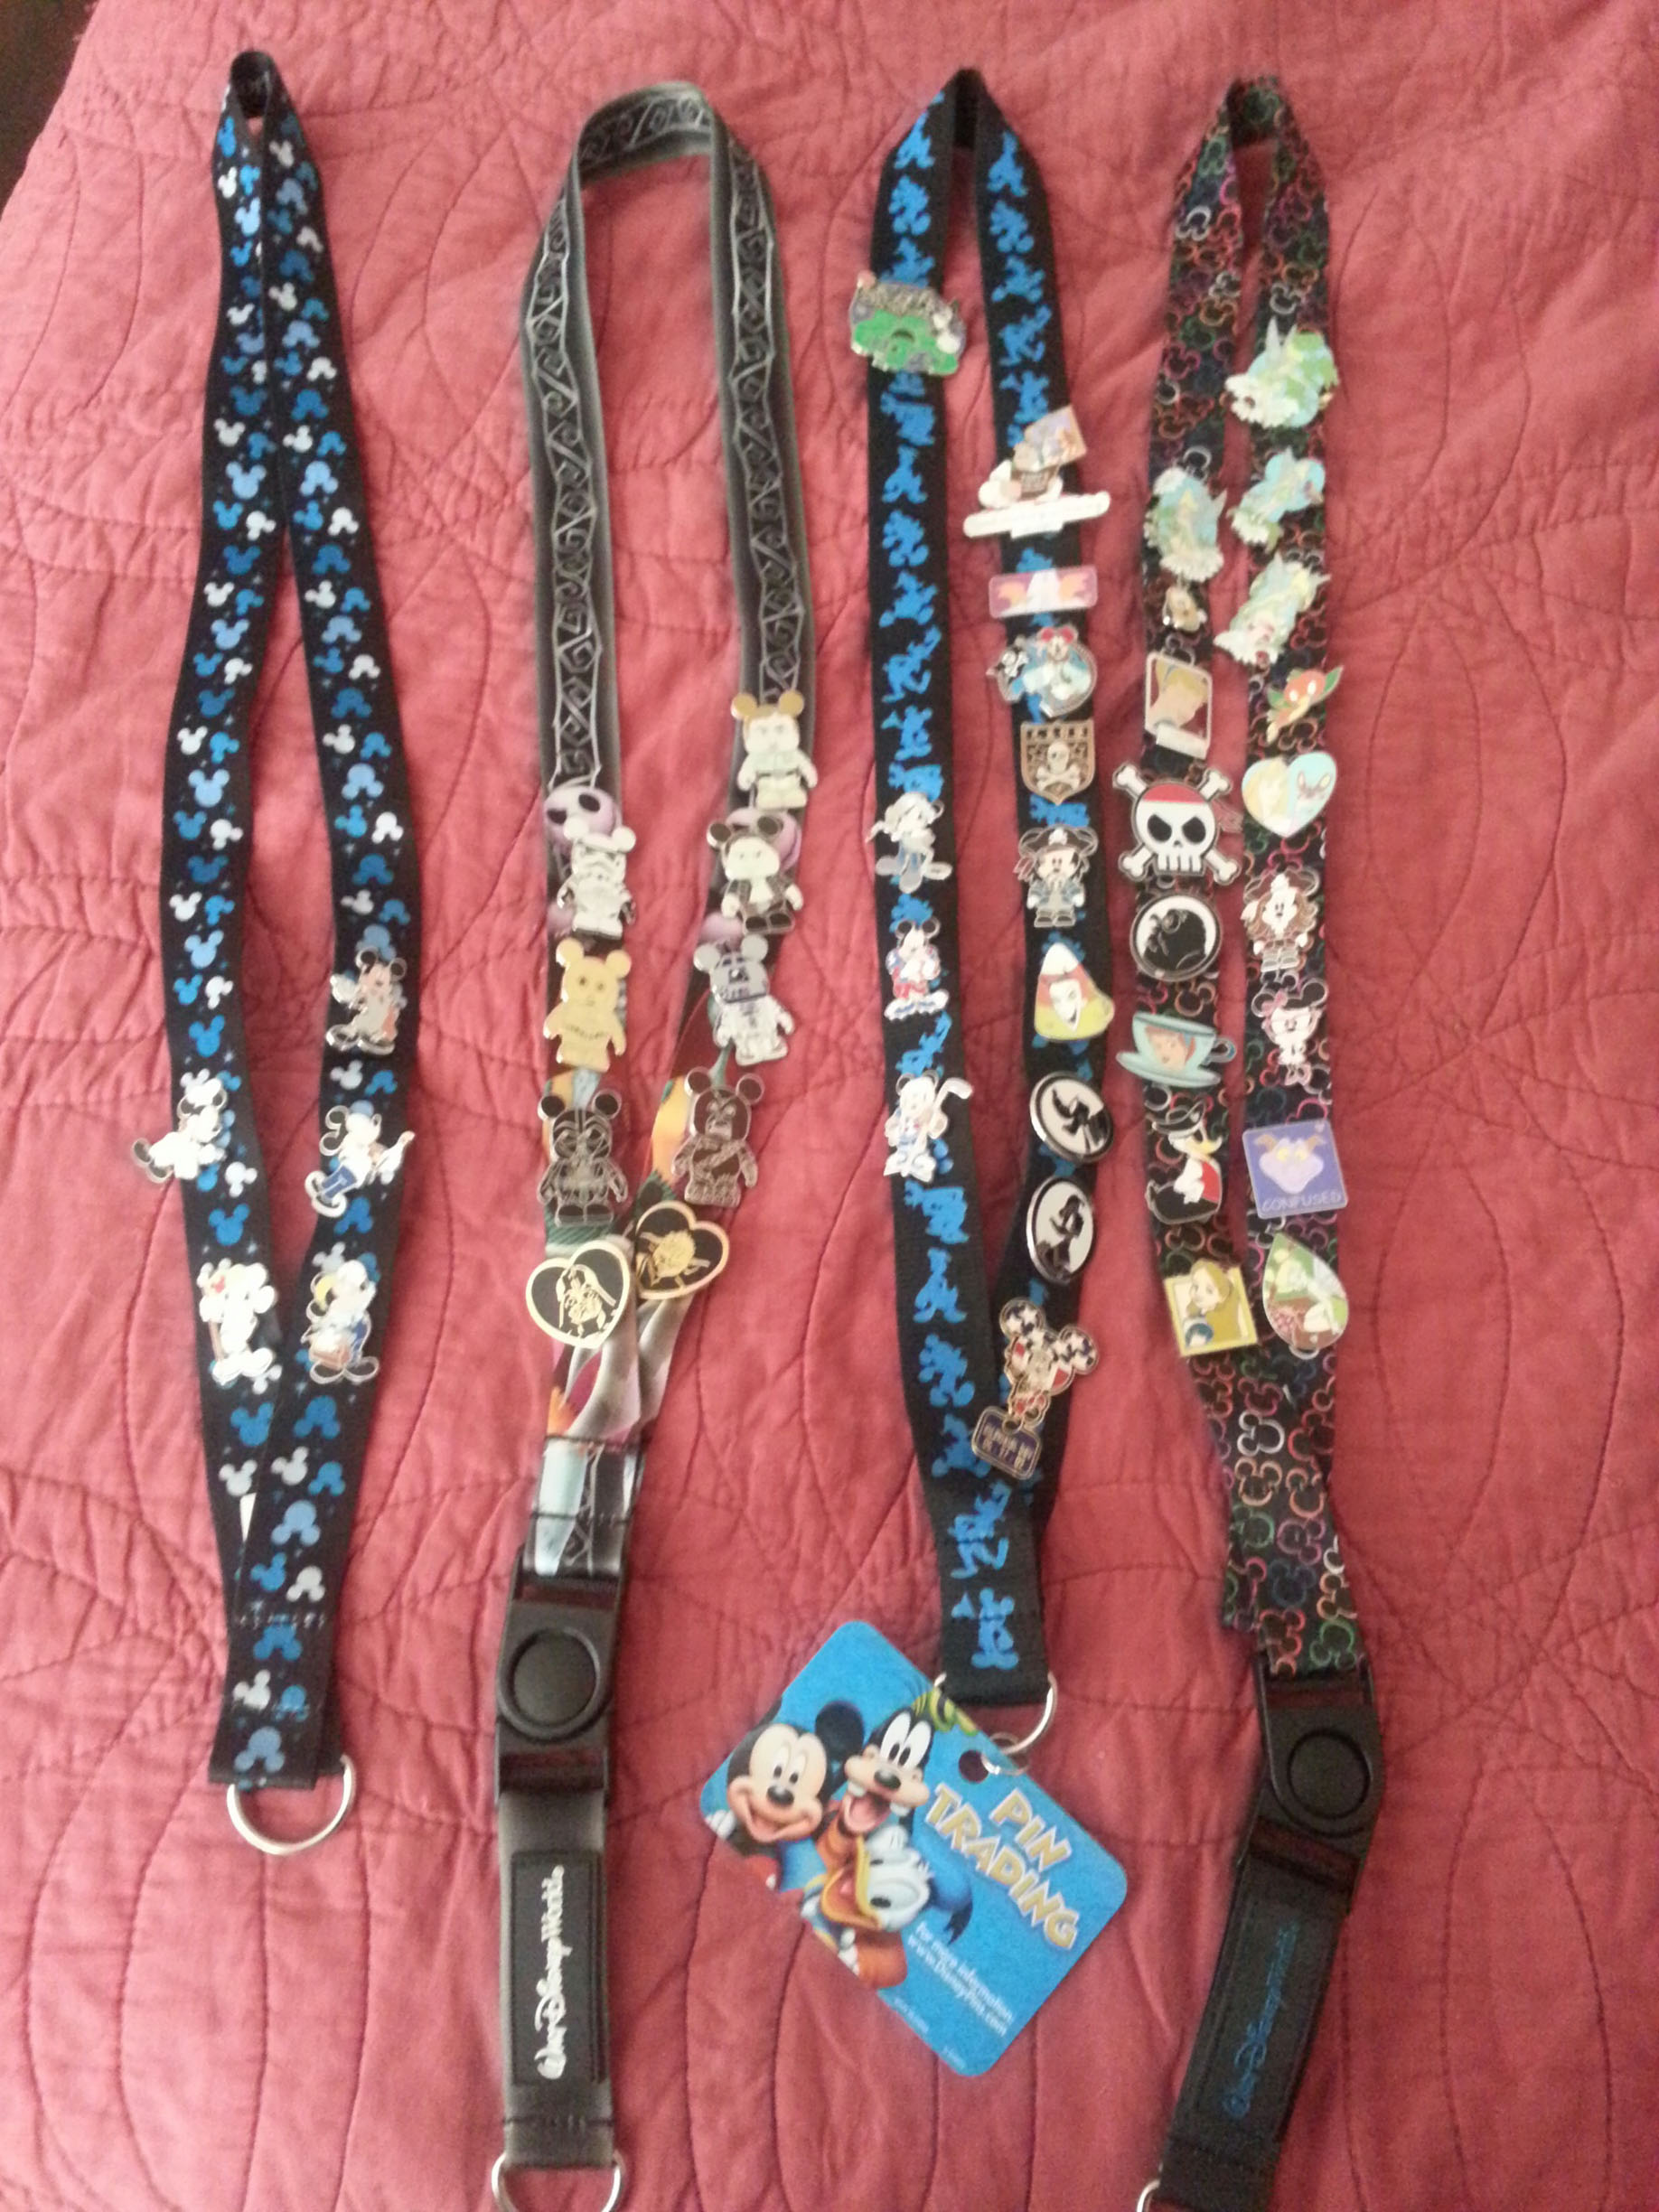 New Disney Pin Trading Bags & Straps at Disney Parks - Disney Pins